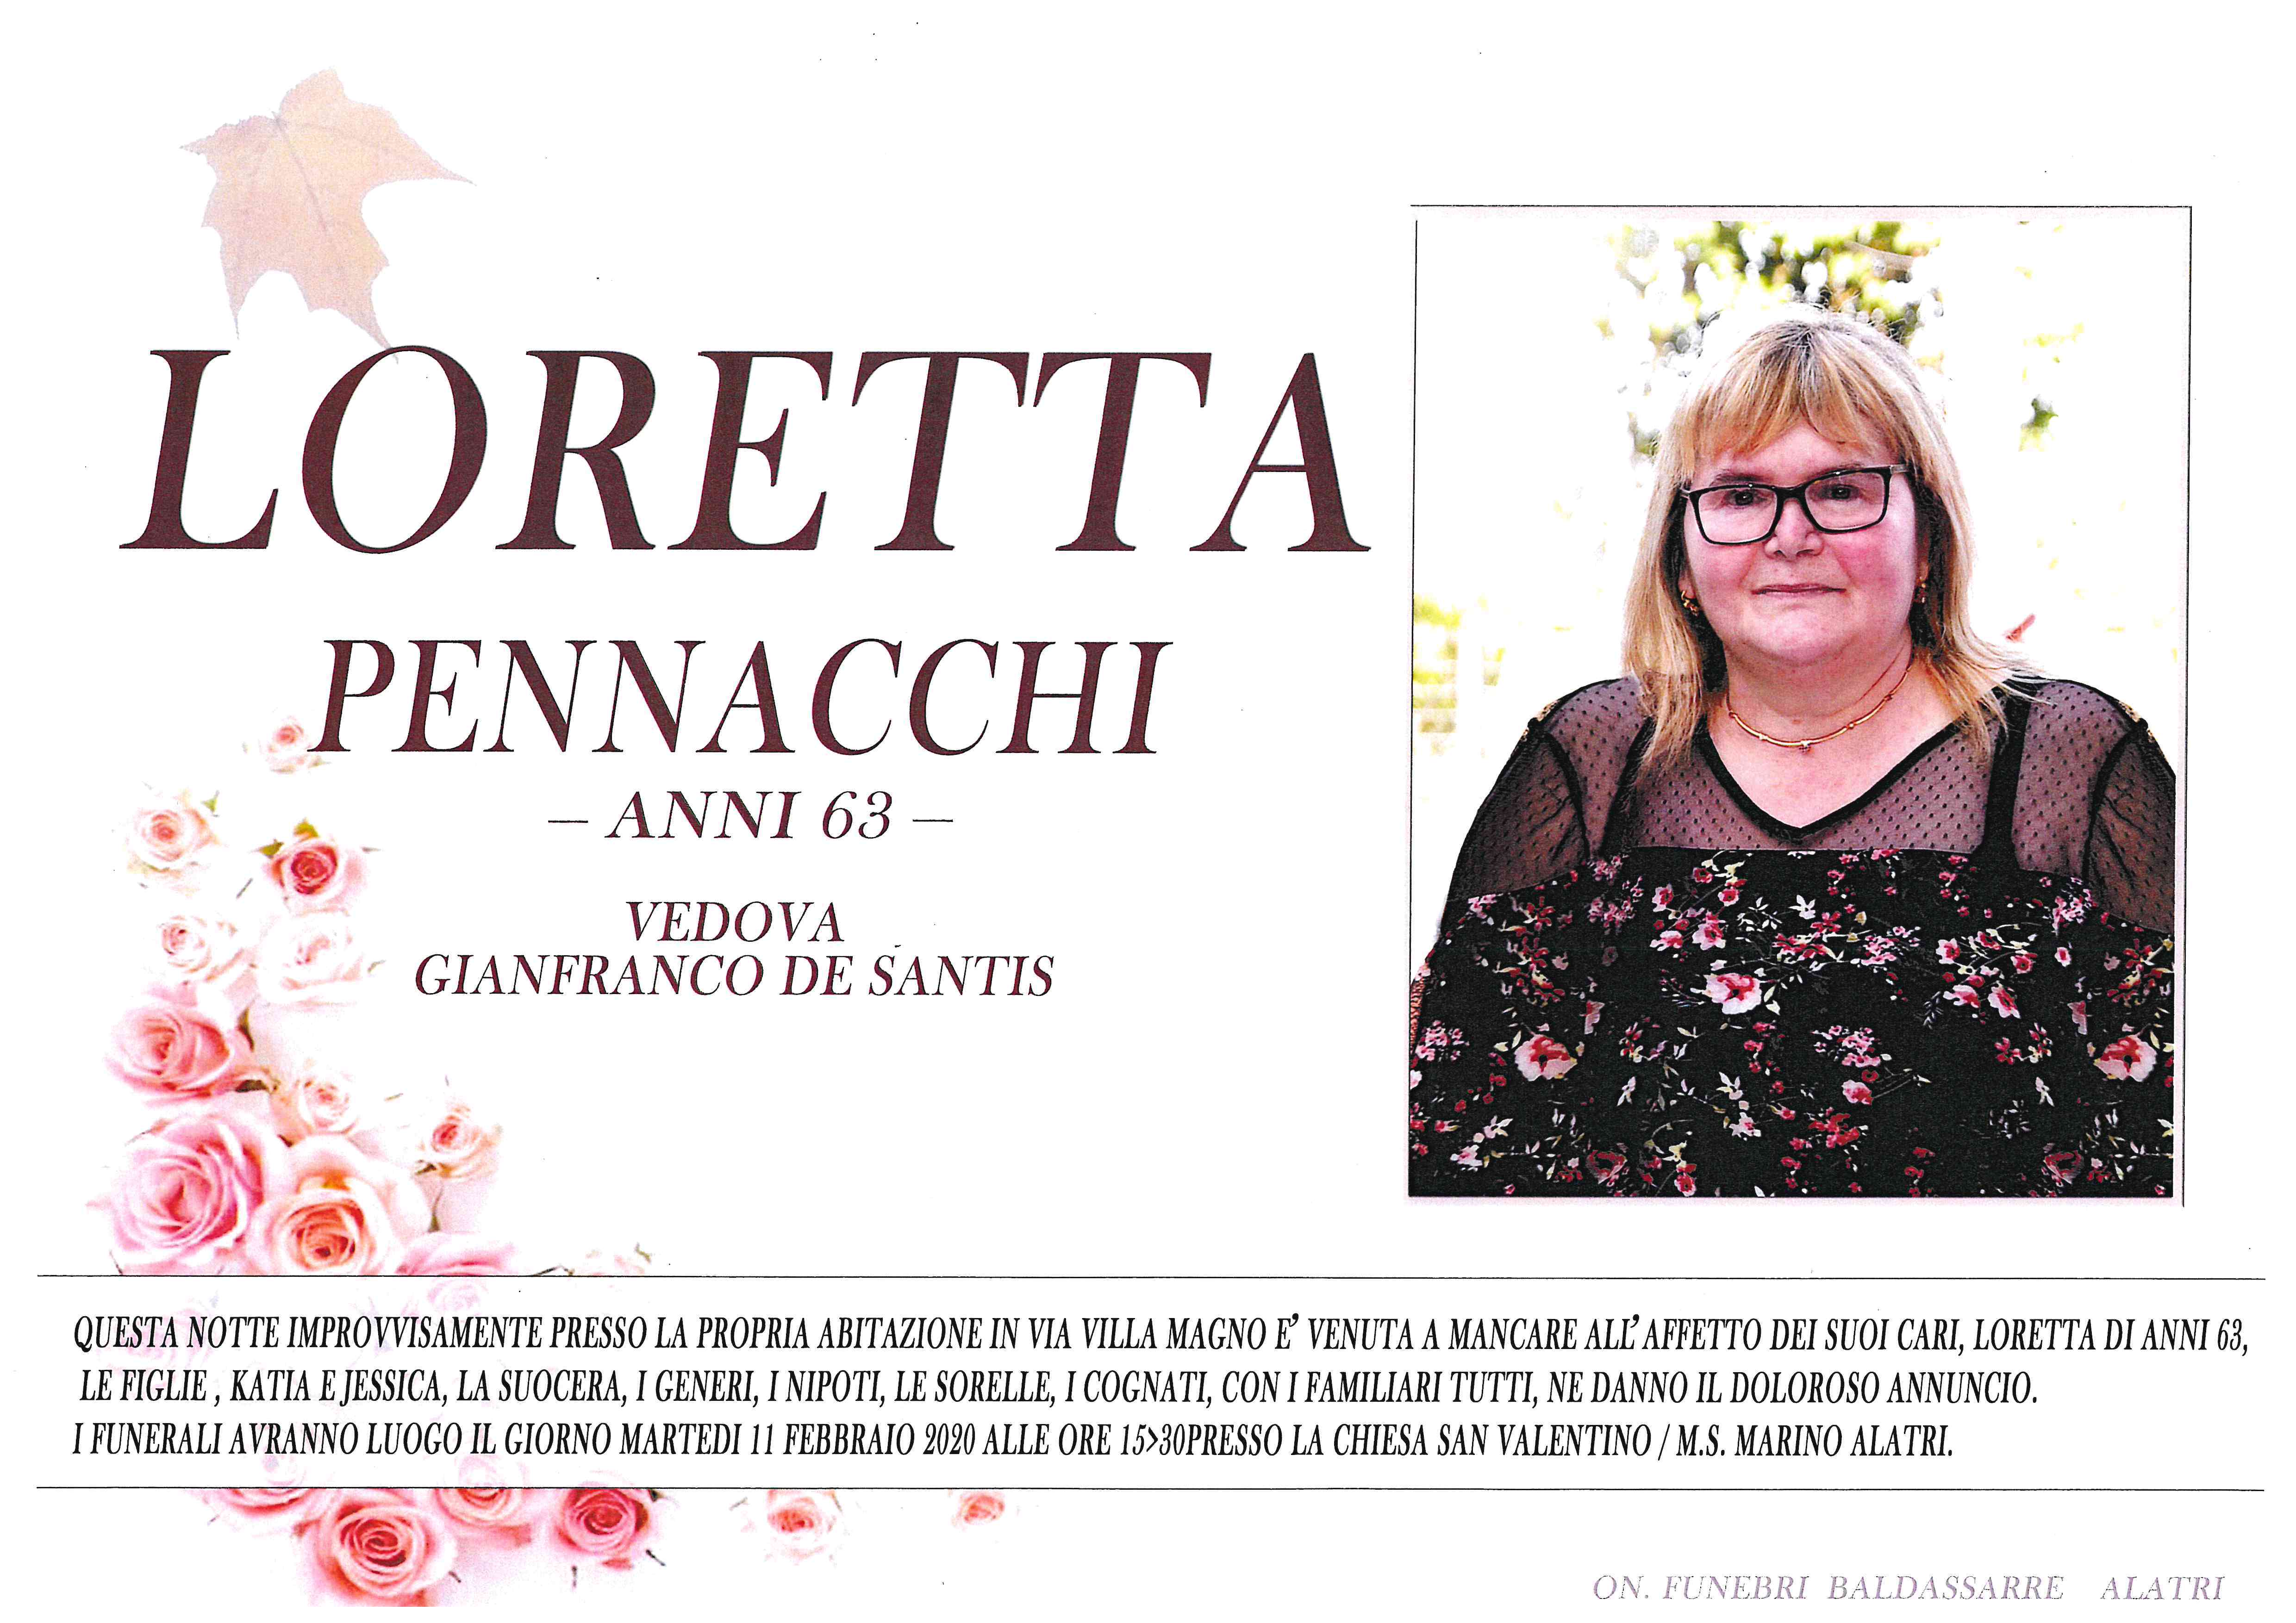 Loretta Pennacchi